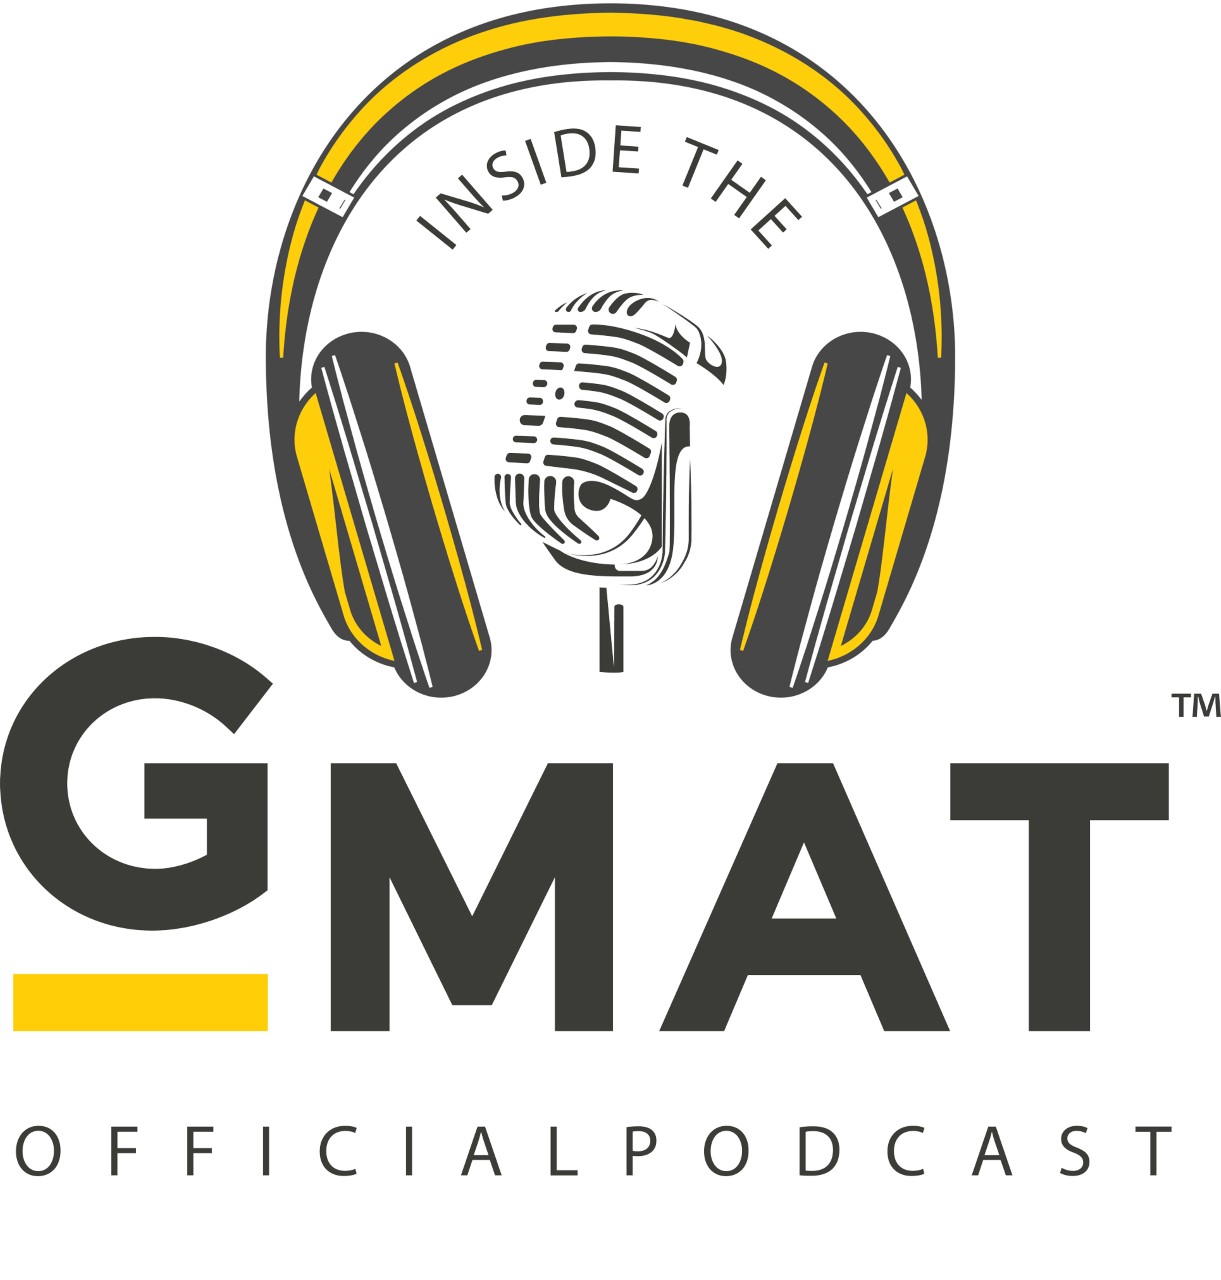 Inside the GMAT logo